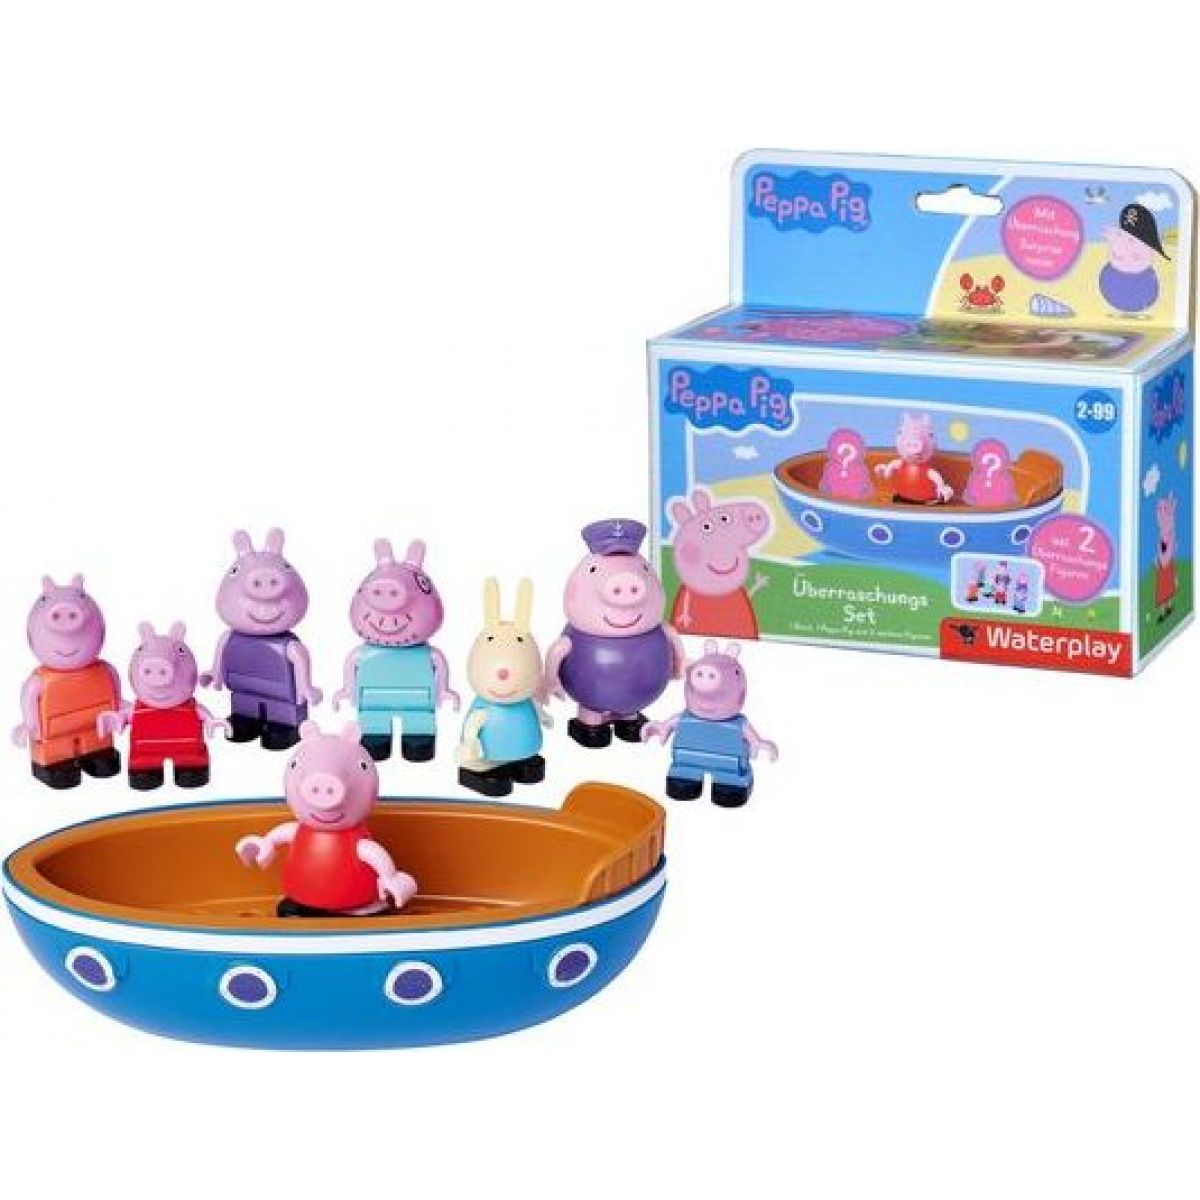 BIG Waterplay Peppa Pig lodička s figurkami s překvapením